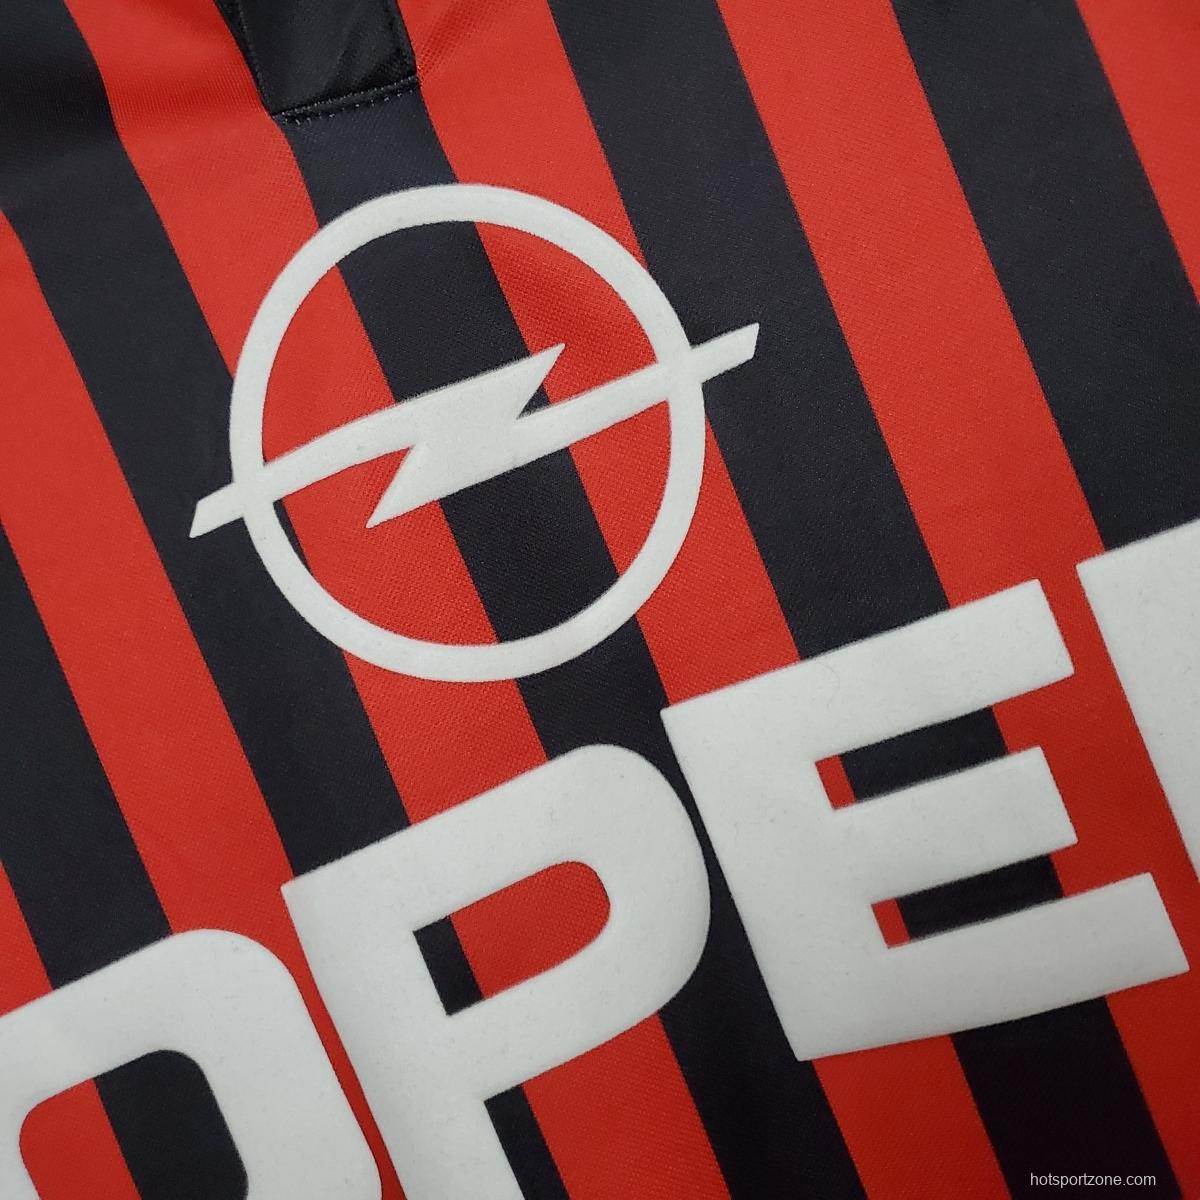 Retro 99-00 AC Milan Centenary home Soccer Jersey